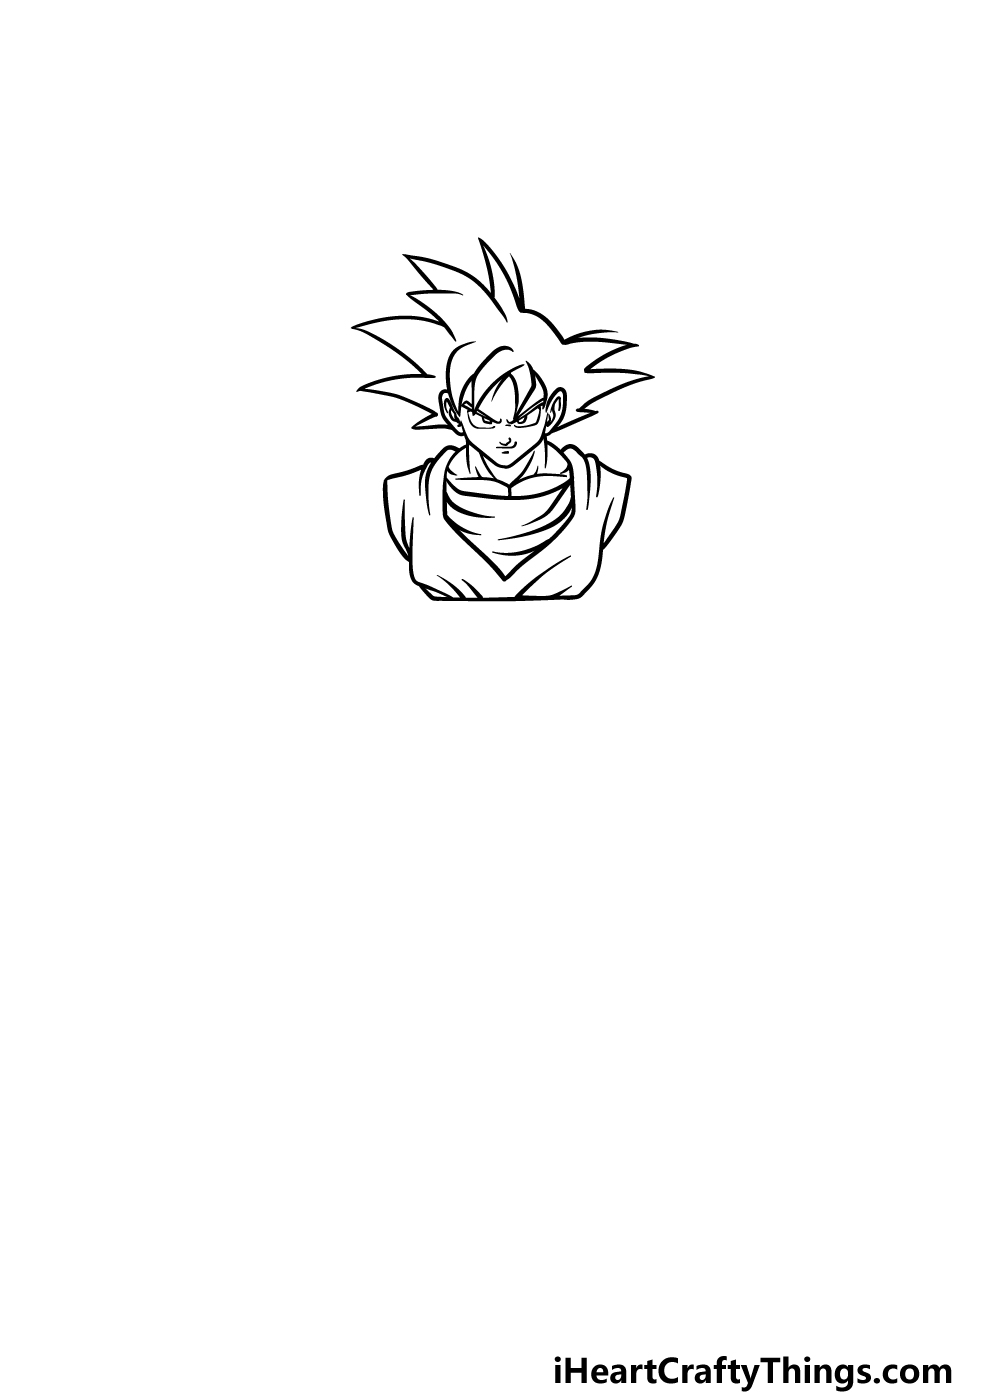 Goku Pencil Drawing by shashidhar90 on DeviantArt